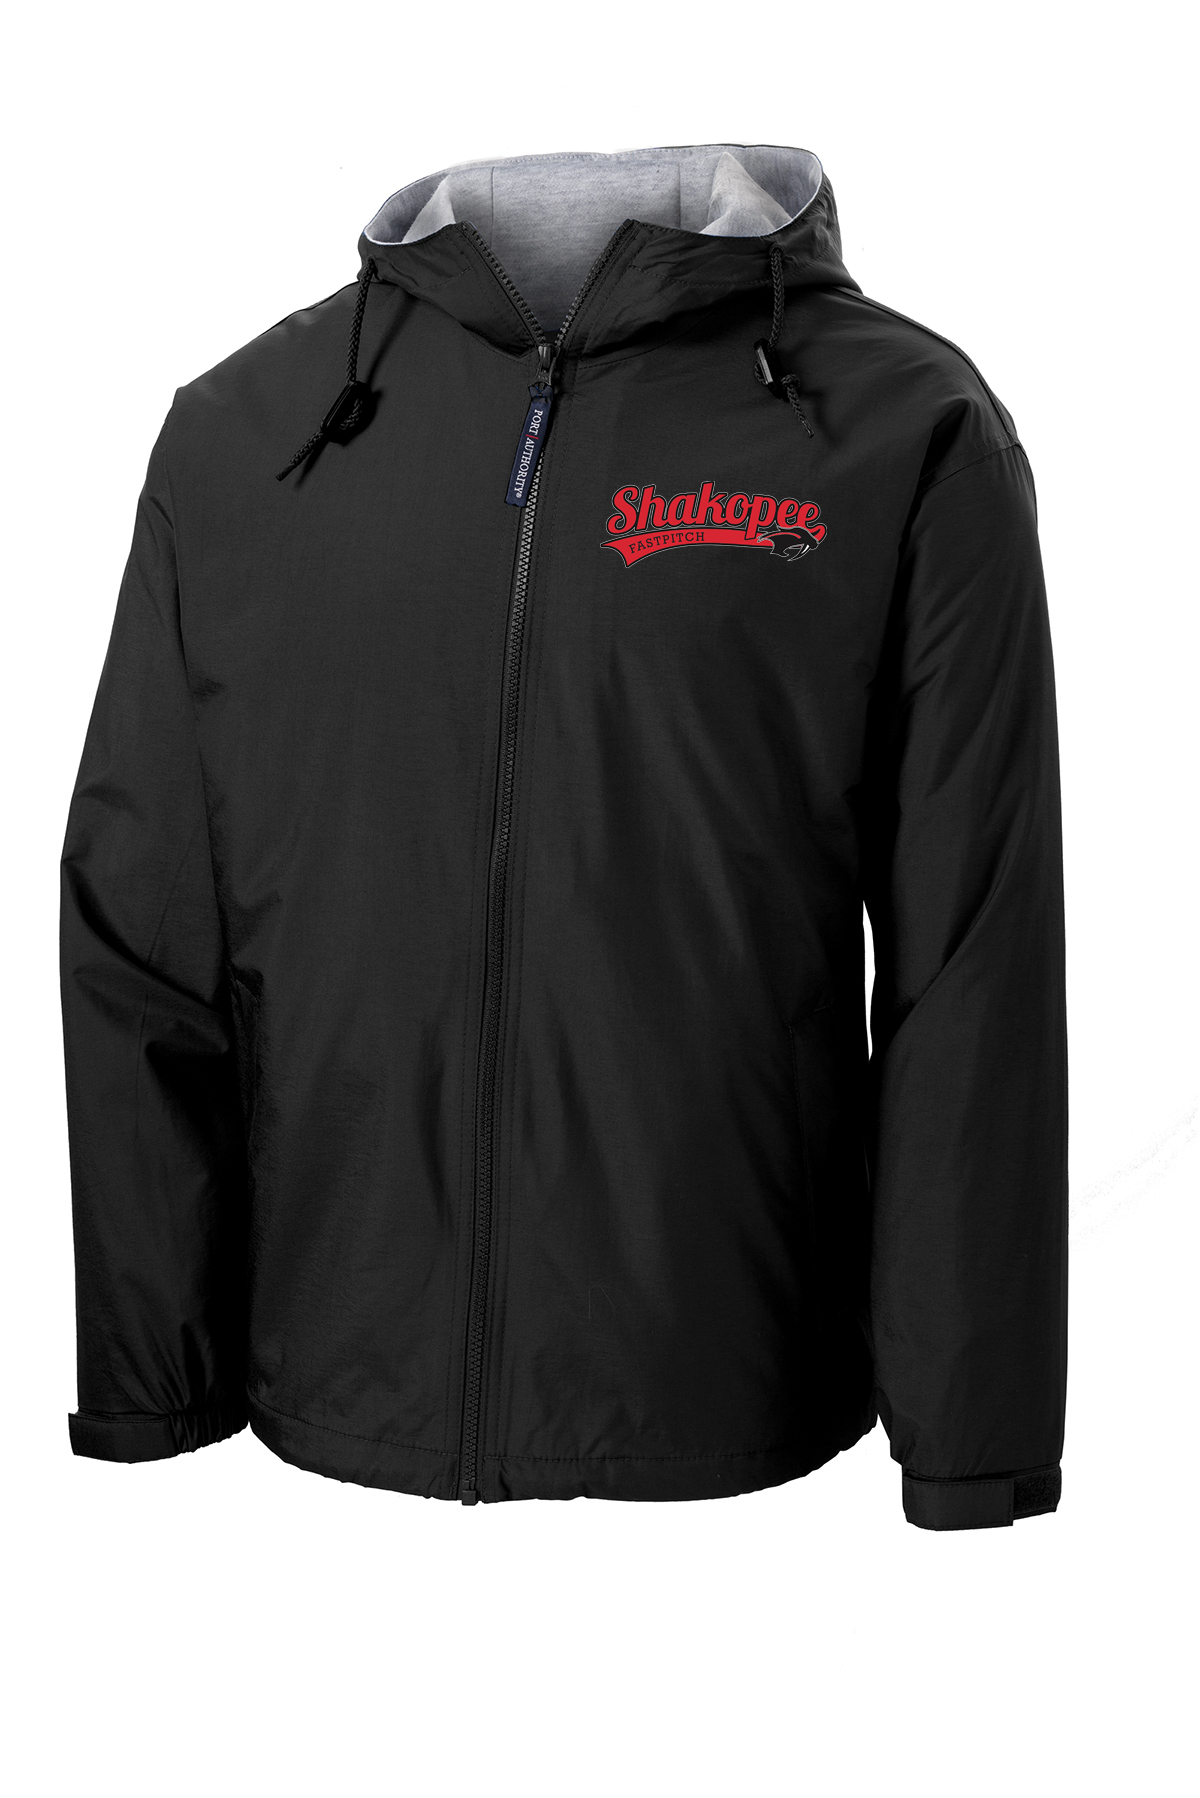 Shakopee Softball Hooded Jacket